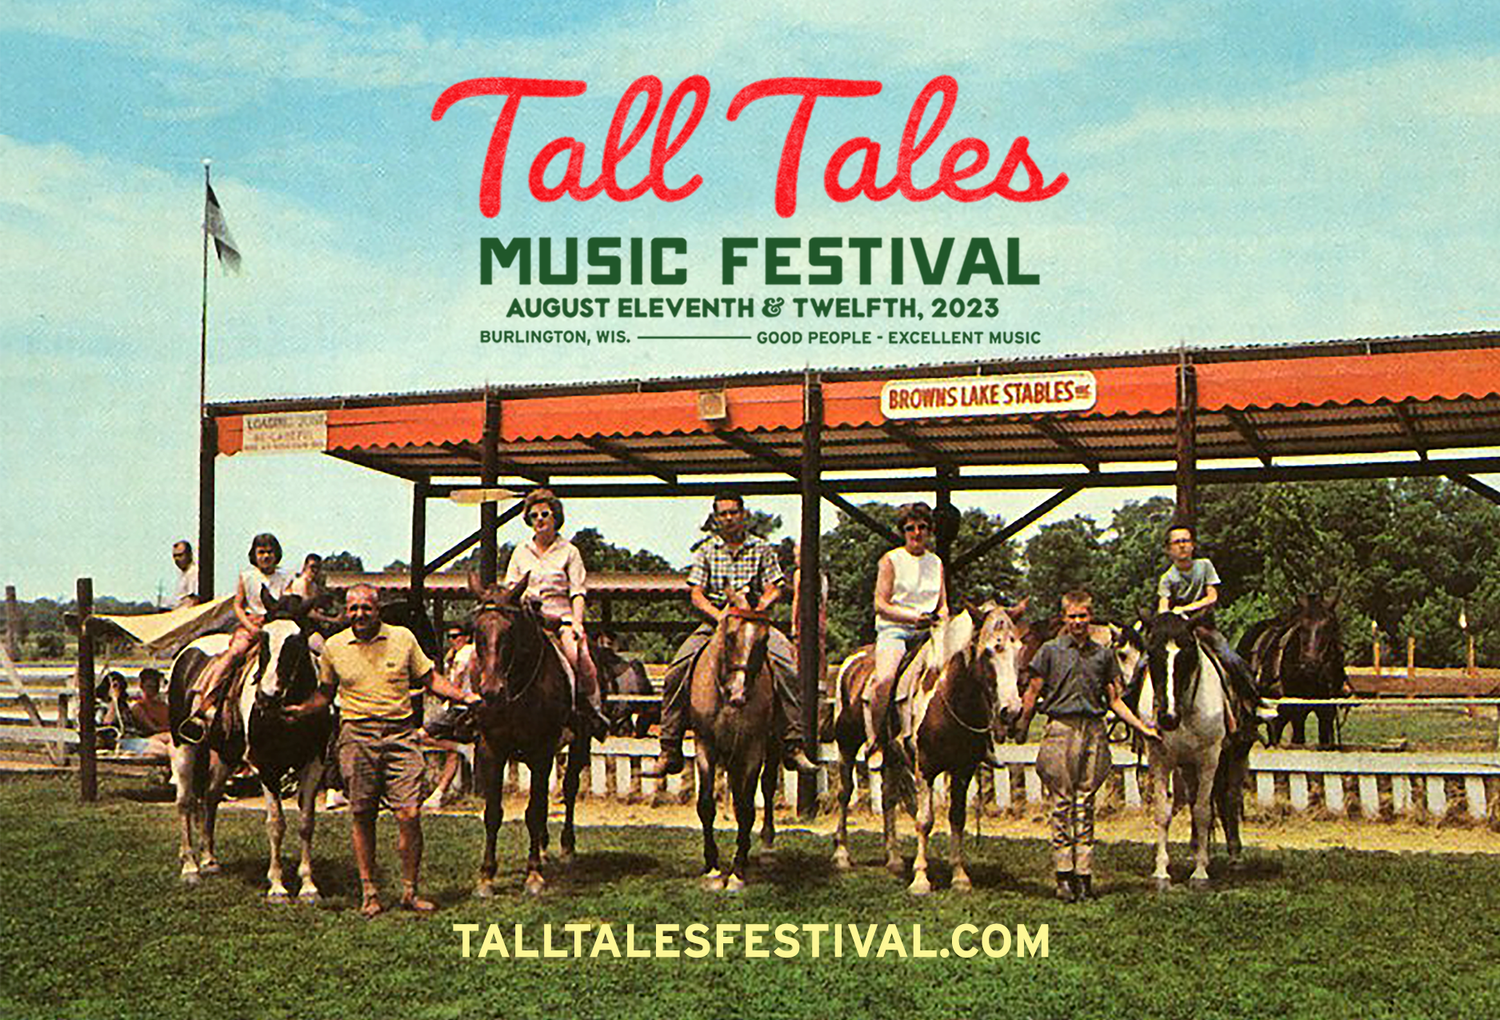 www.talltalesfestival.com